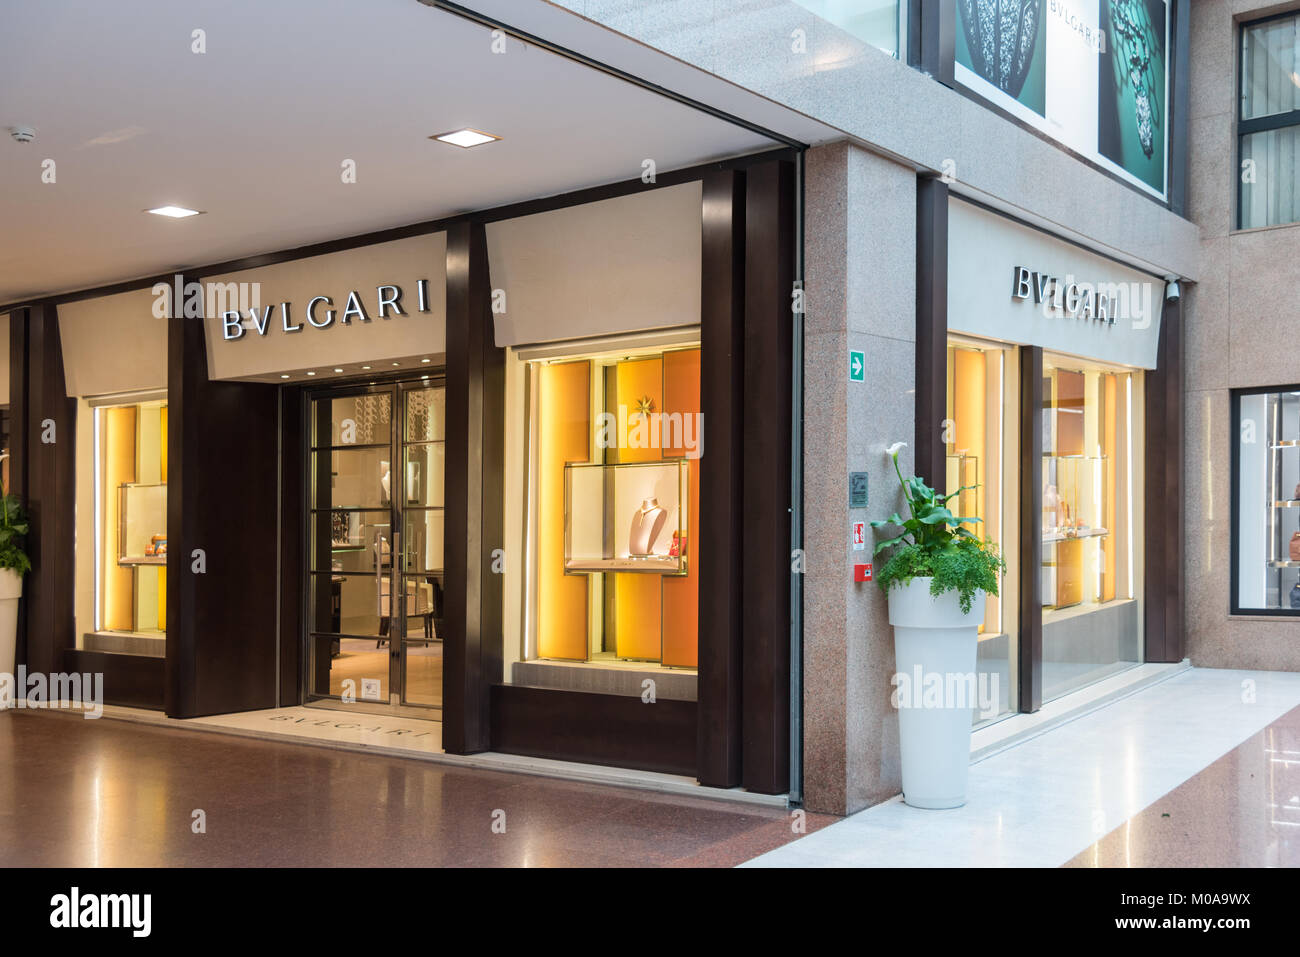 The  Bvlgari or Bulgari jewelery shop in glossy, glass-roofed shopping center full of upmarket designer fashion stores. Stock Photo